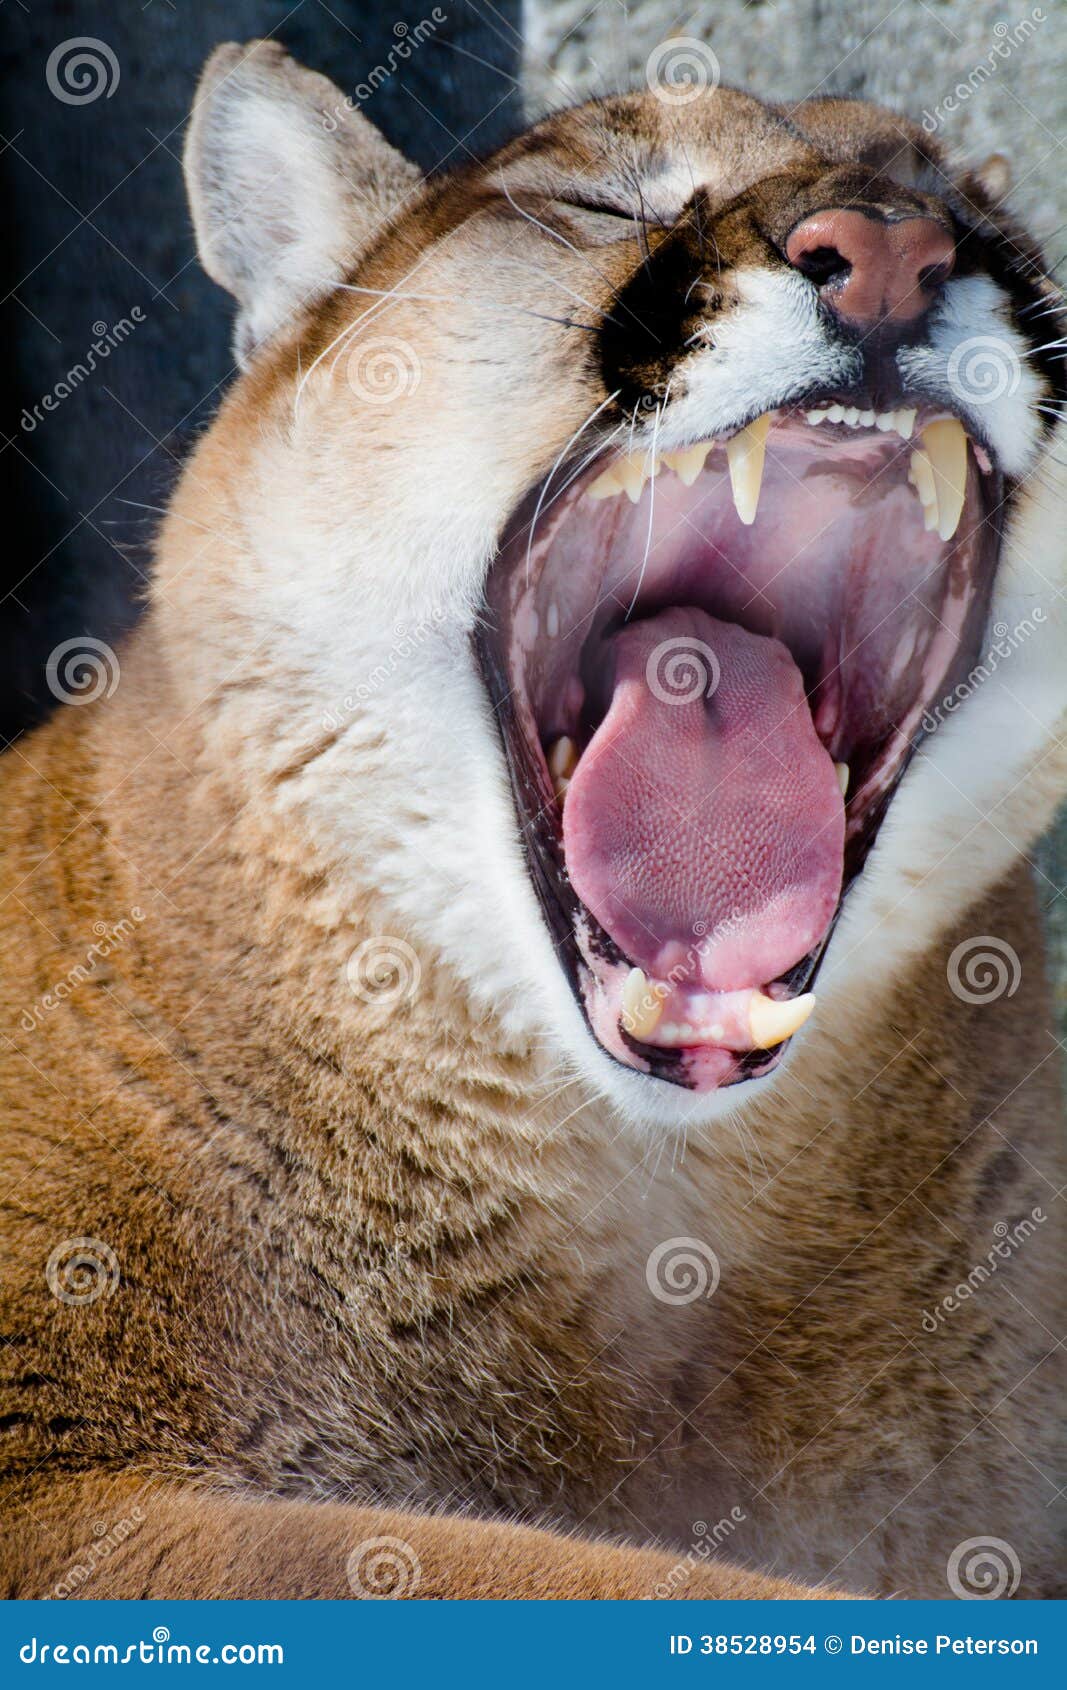 Cougar Puma Mountain Lion Tongue Photos - Free & Royalty-Free ...